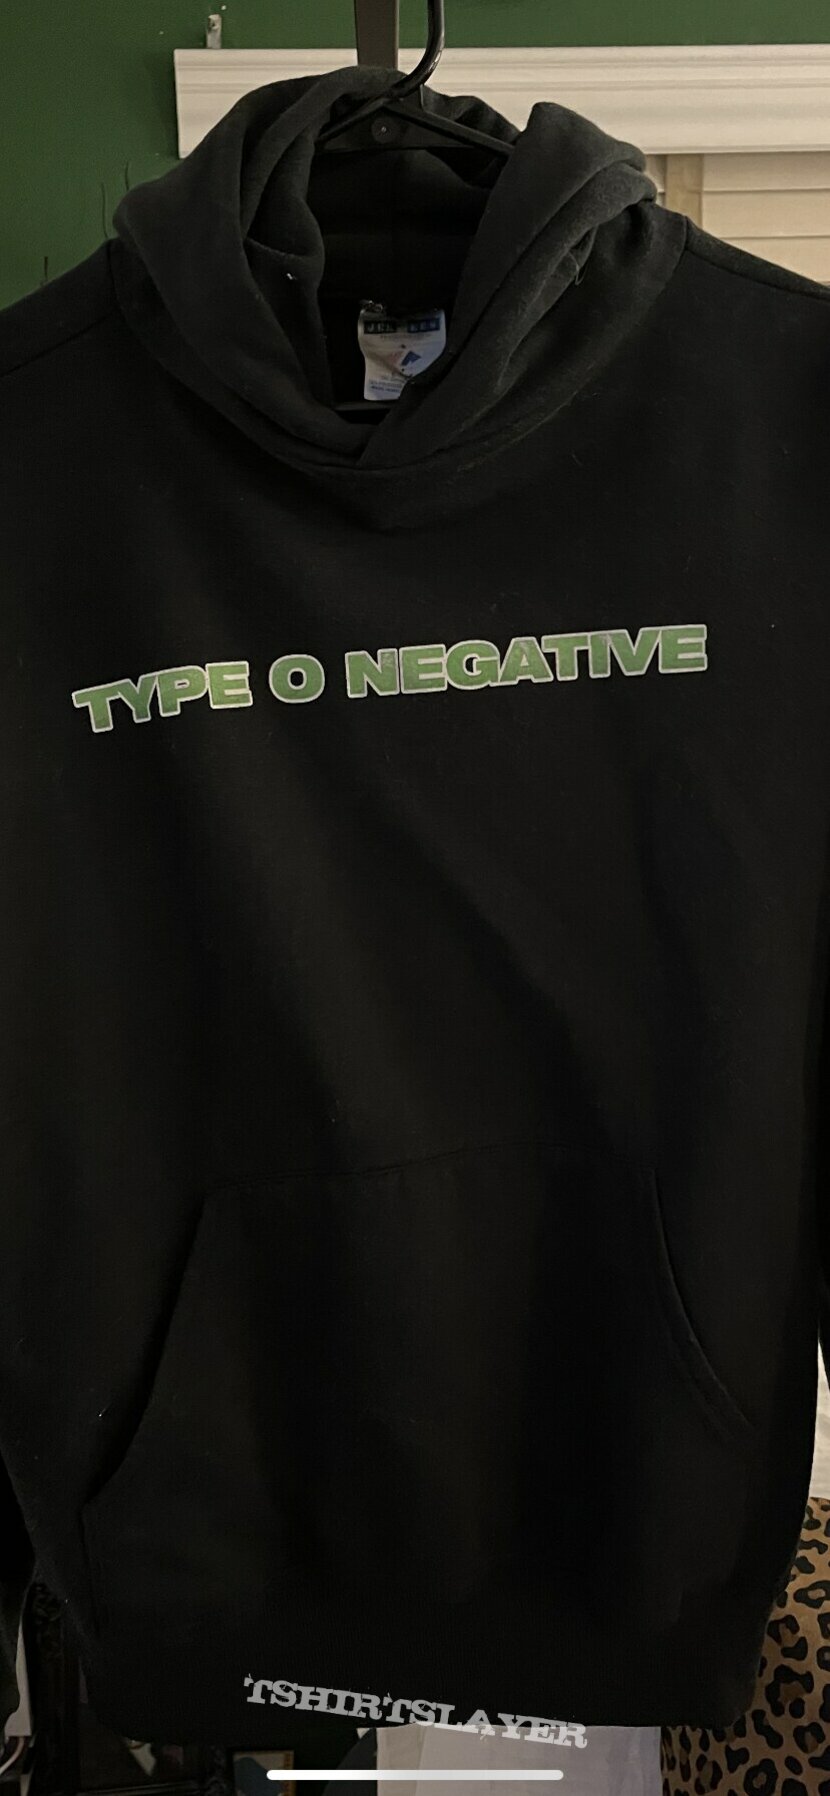 type o negative